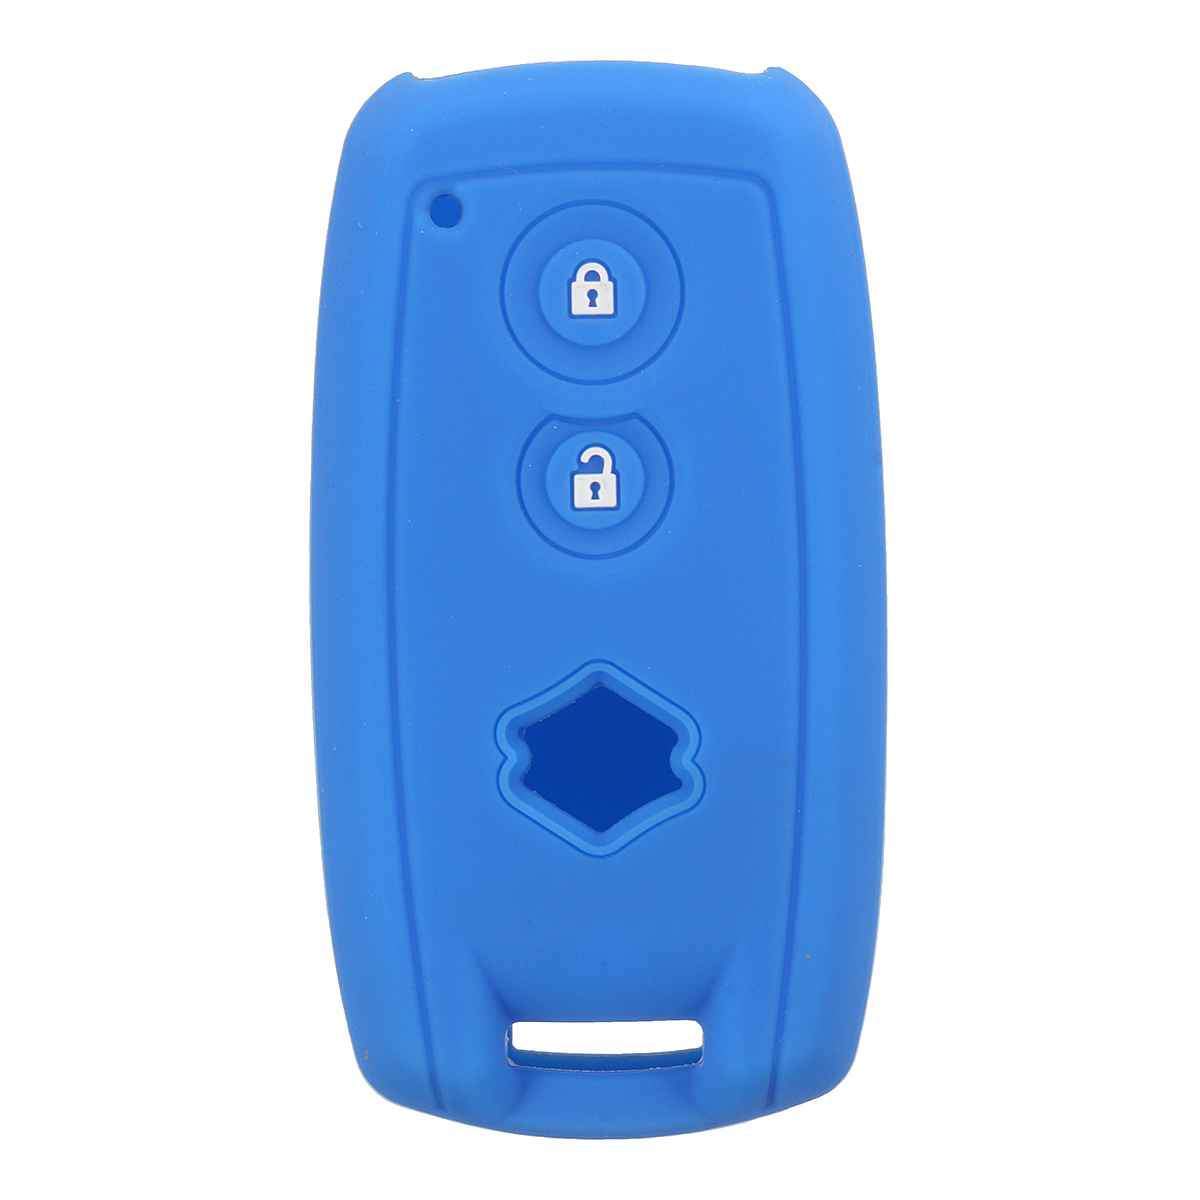 Kék színű, 2 gombos Suzuki kulcs szilikon tok.